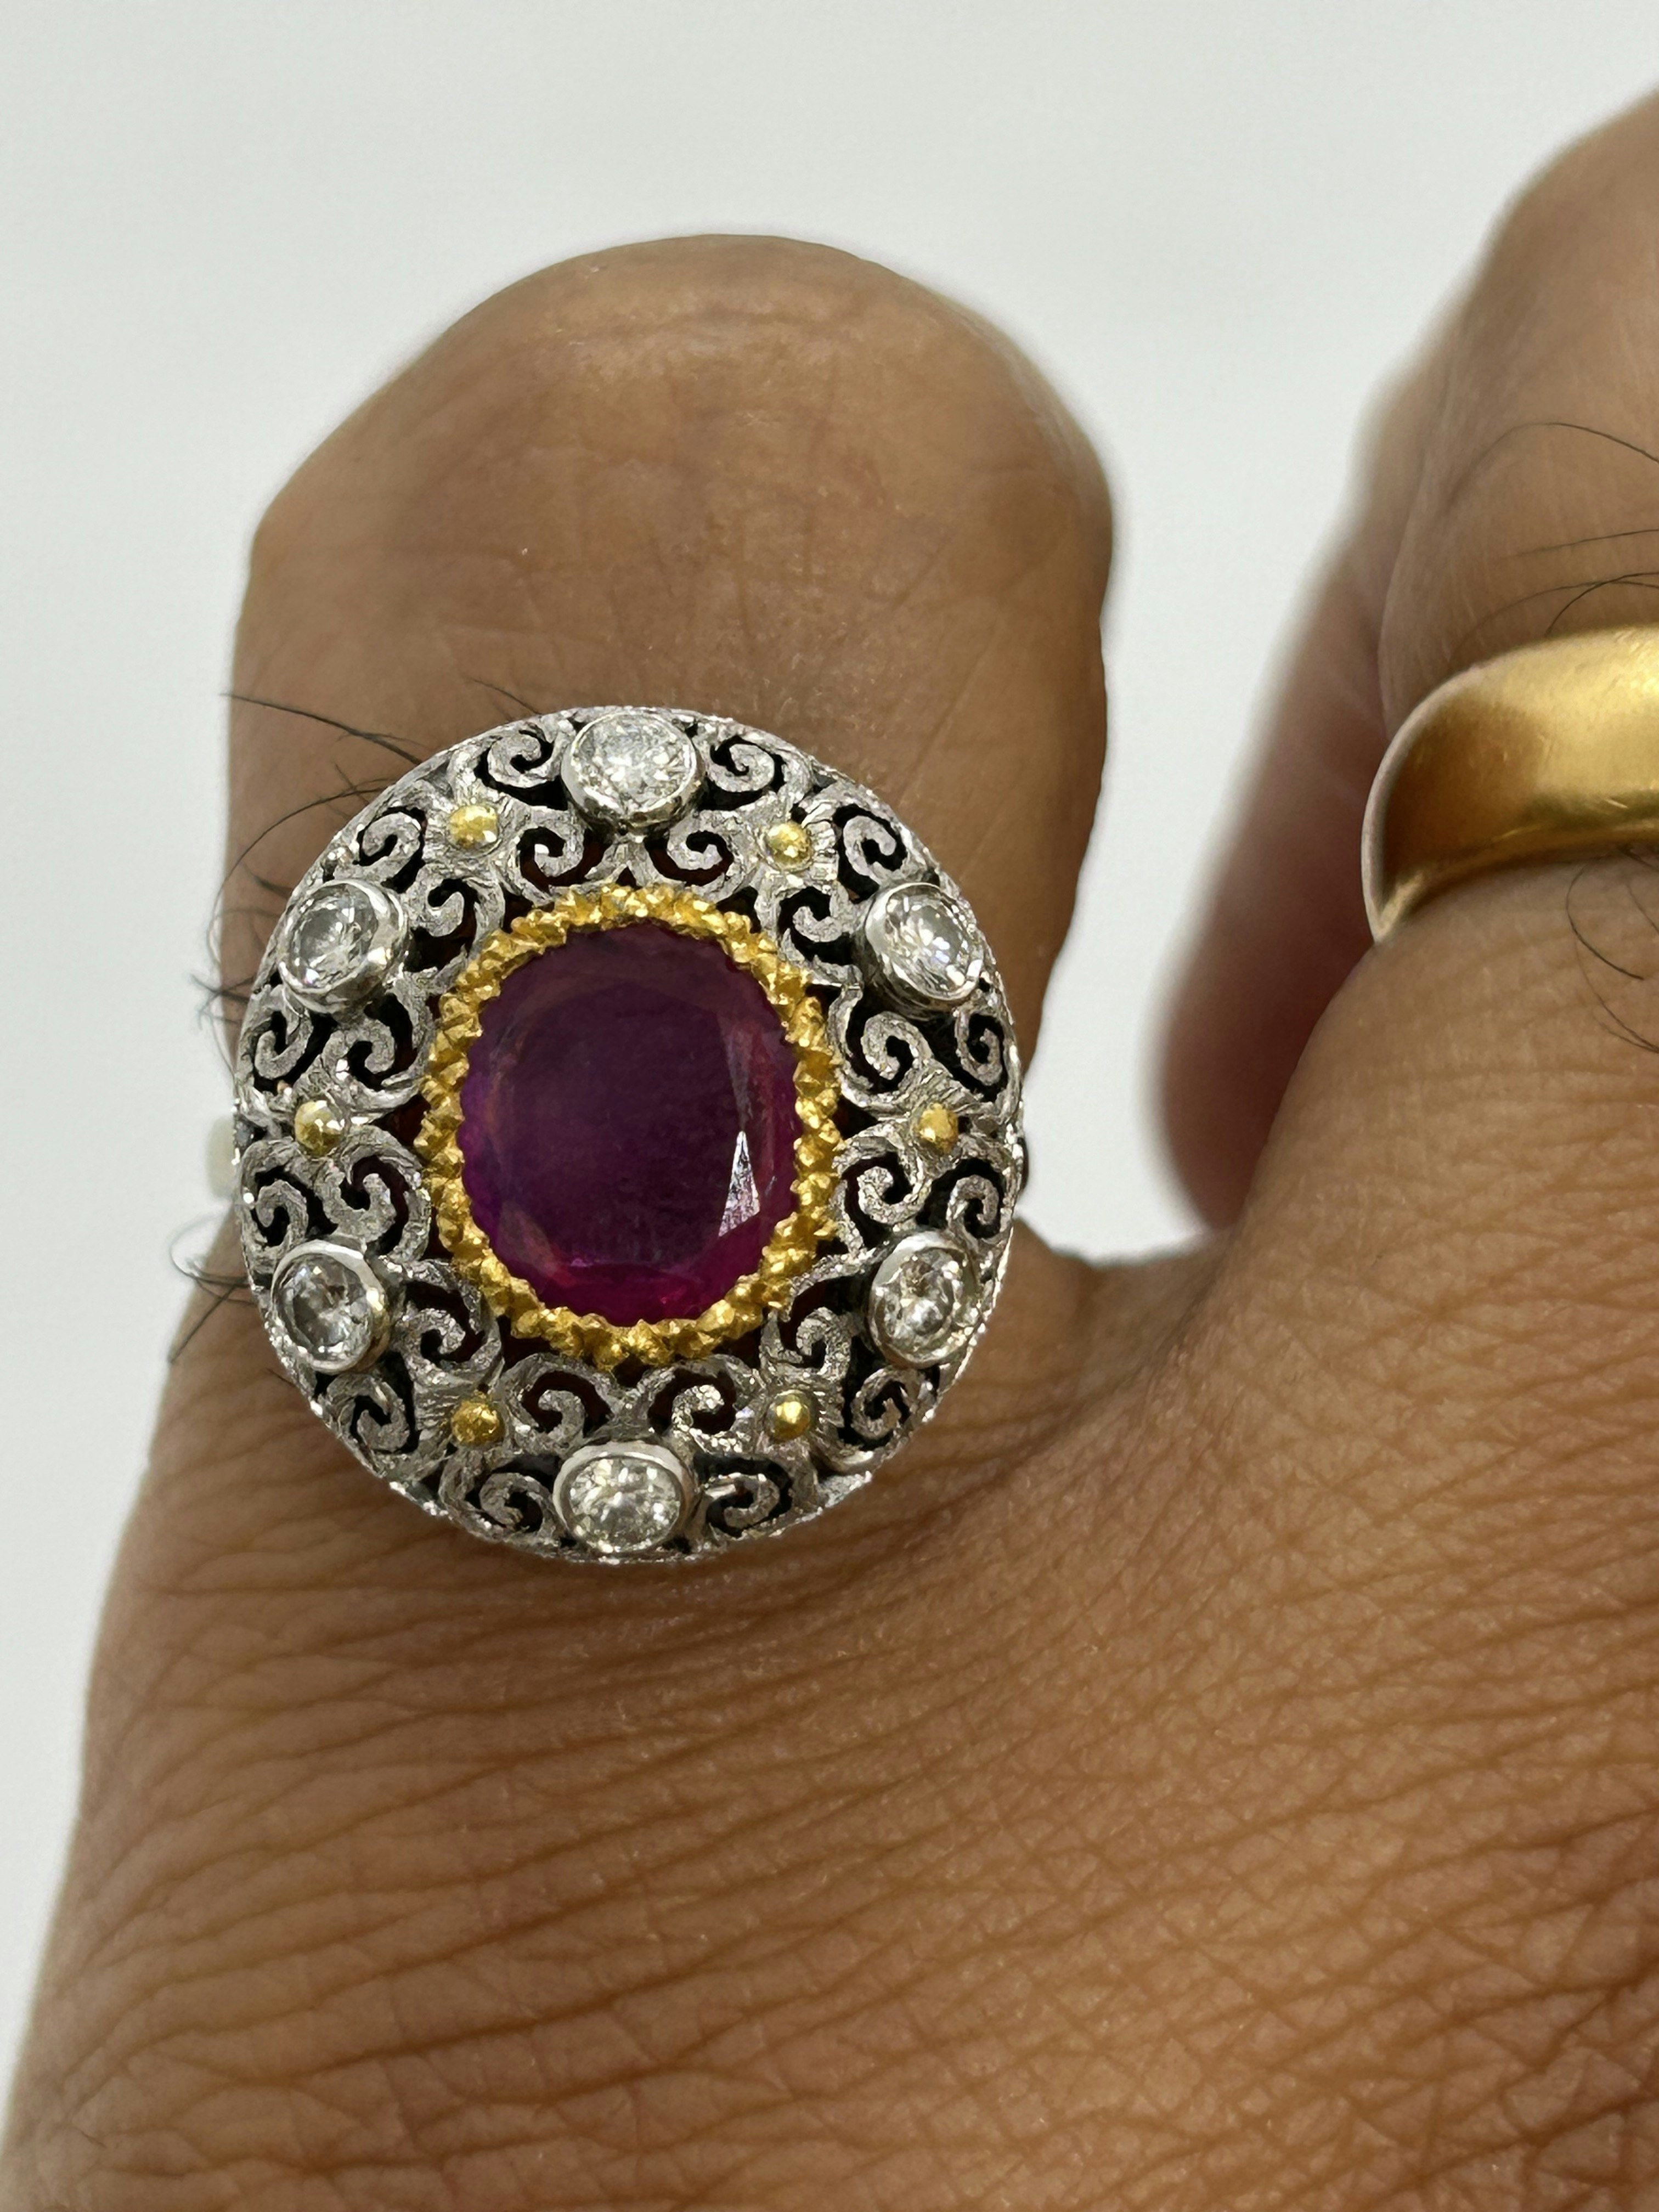 Buccellati Vintage Gold Diamond Engagement Ring - EDJ | Buccellati  engagement ring, Vintage engagement rings unique, Vintage engagement rings